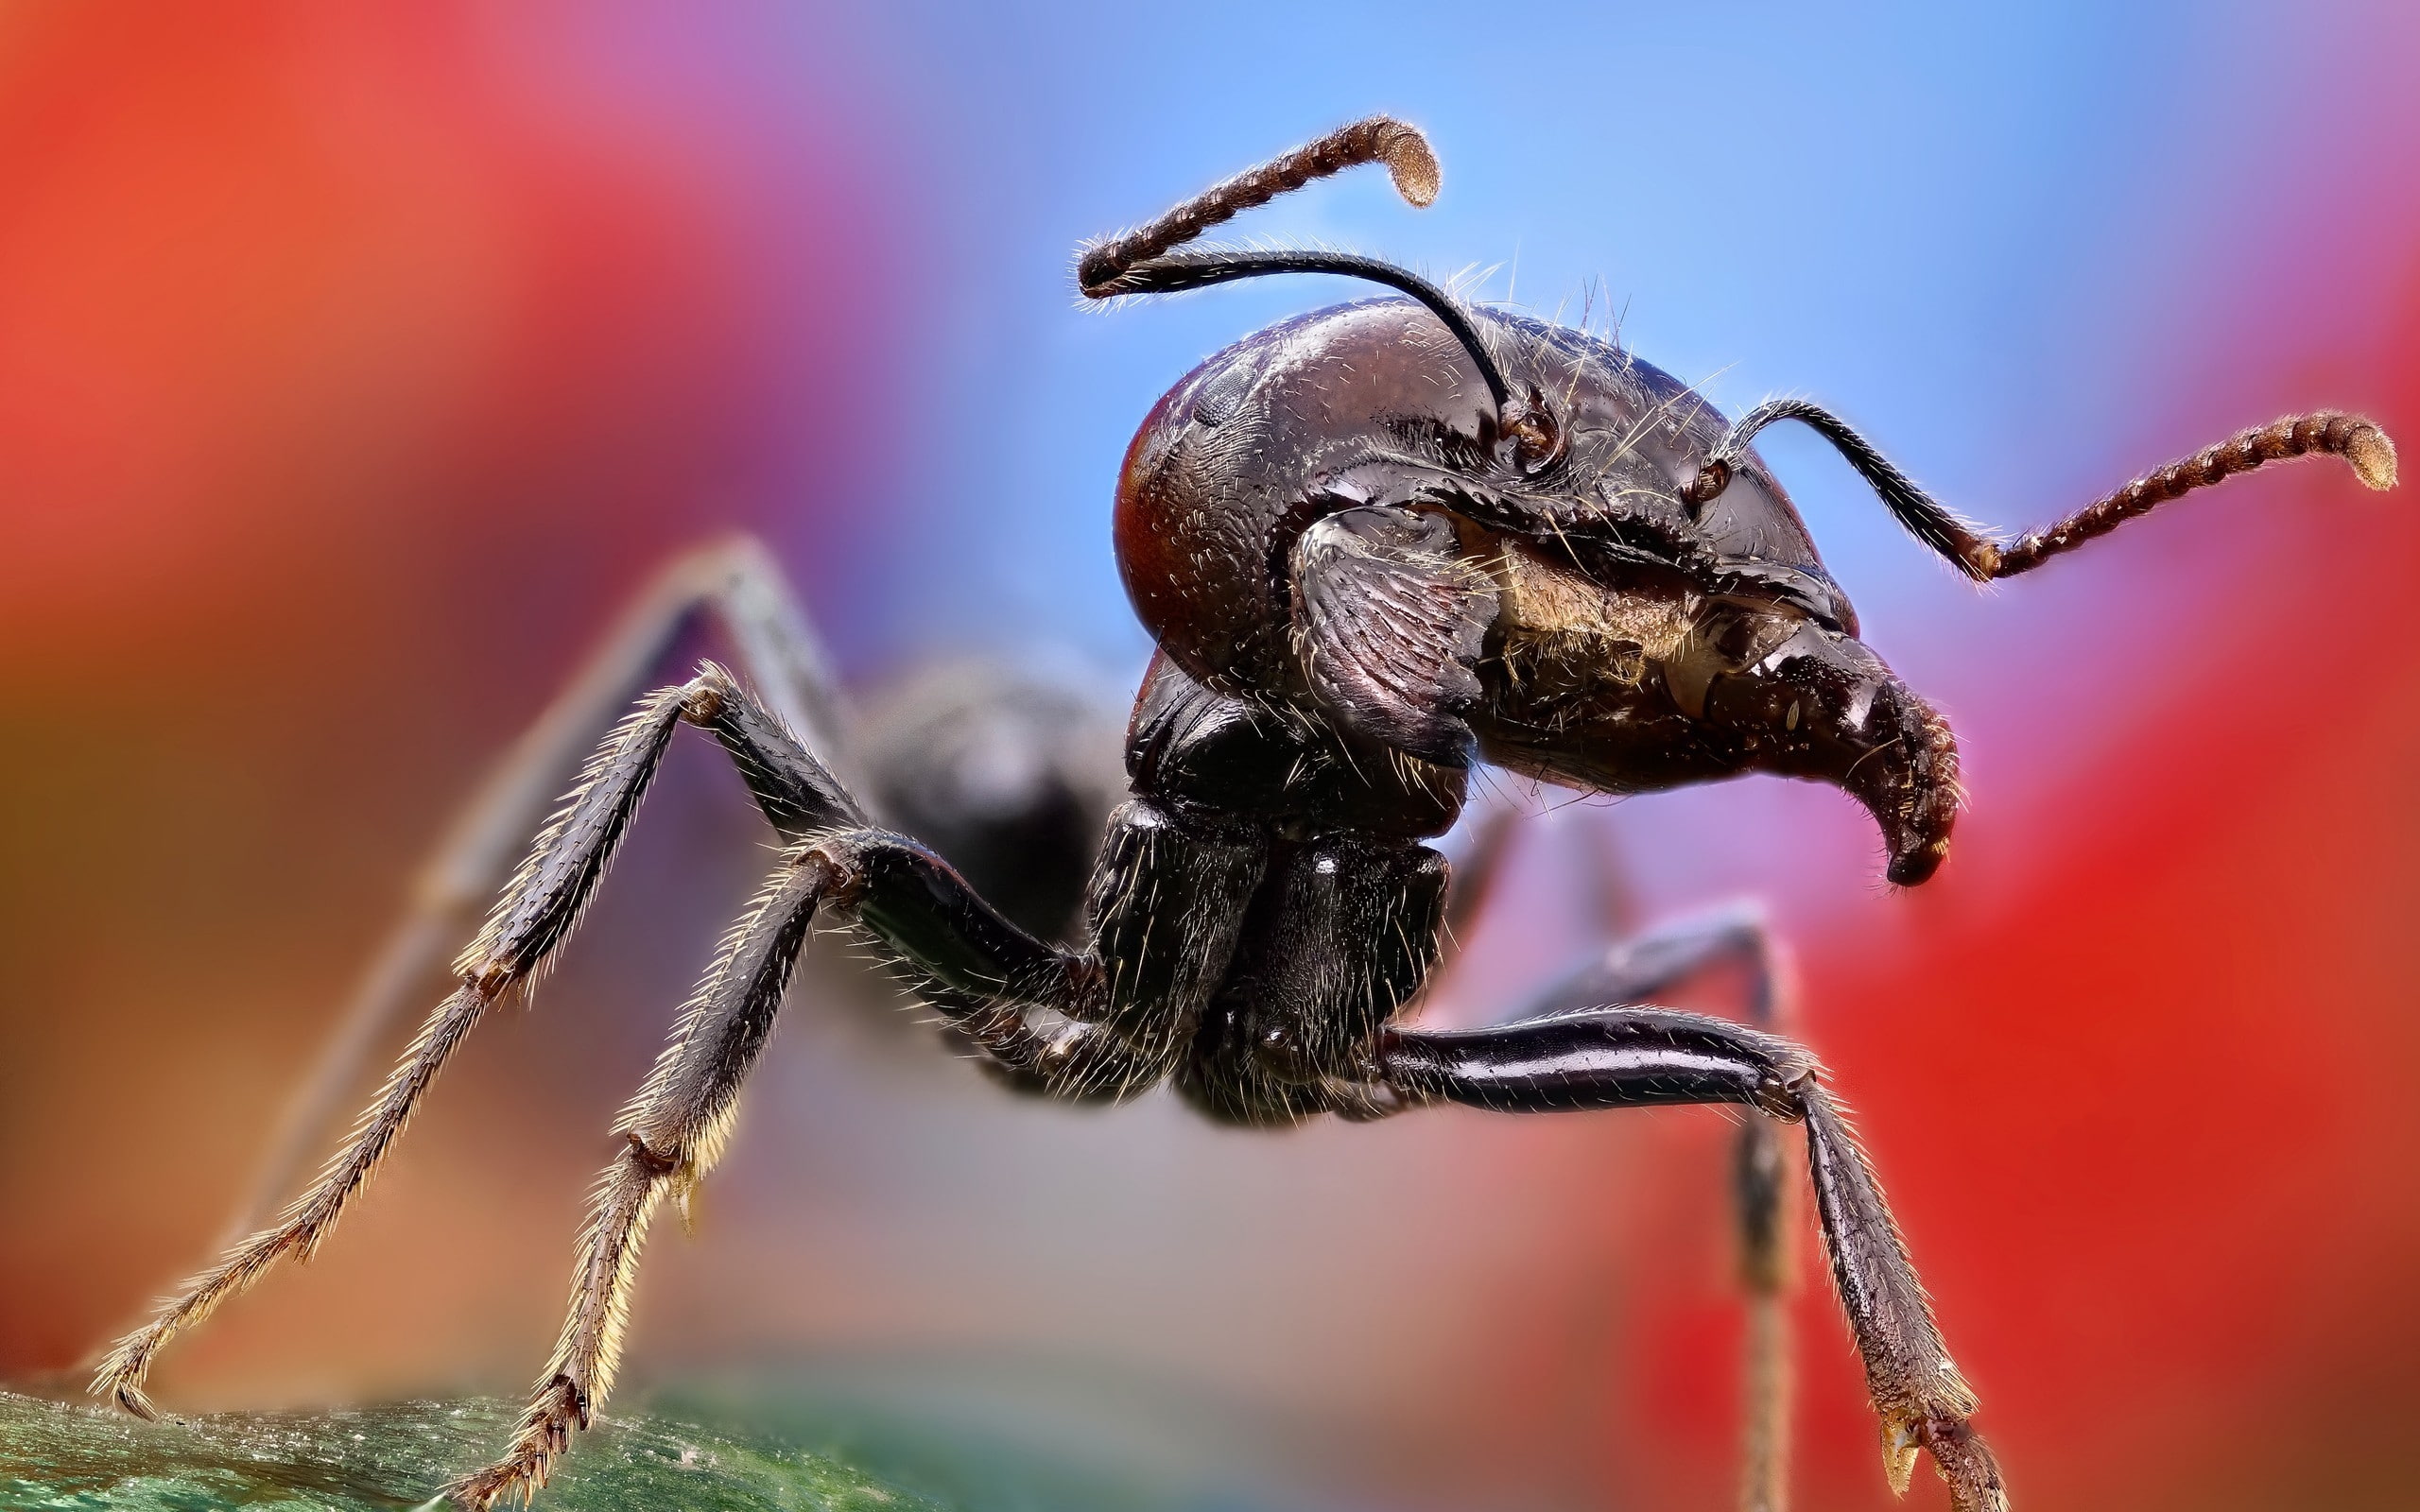 Ant Close Up, black ant